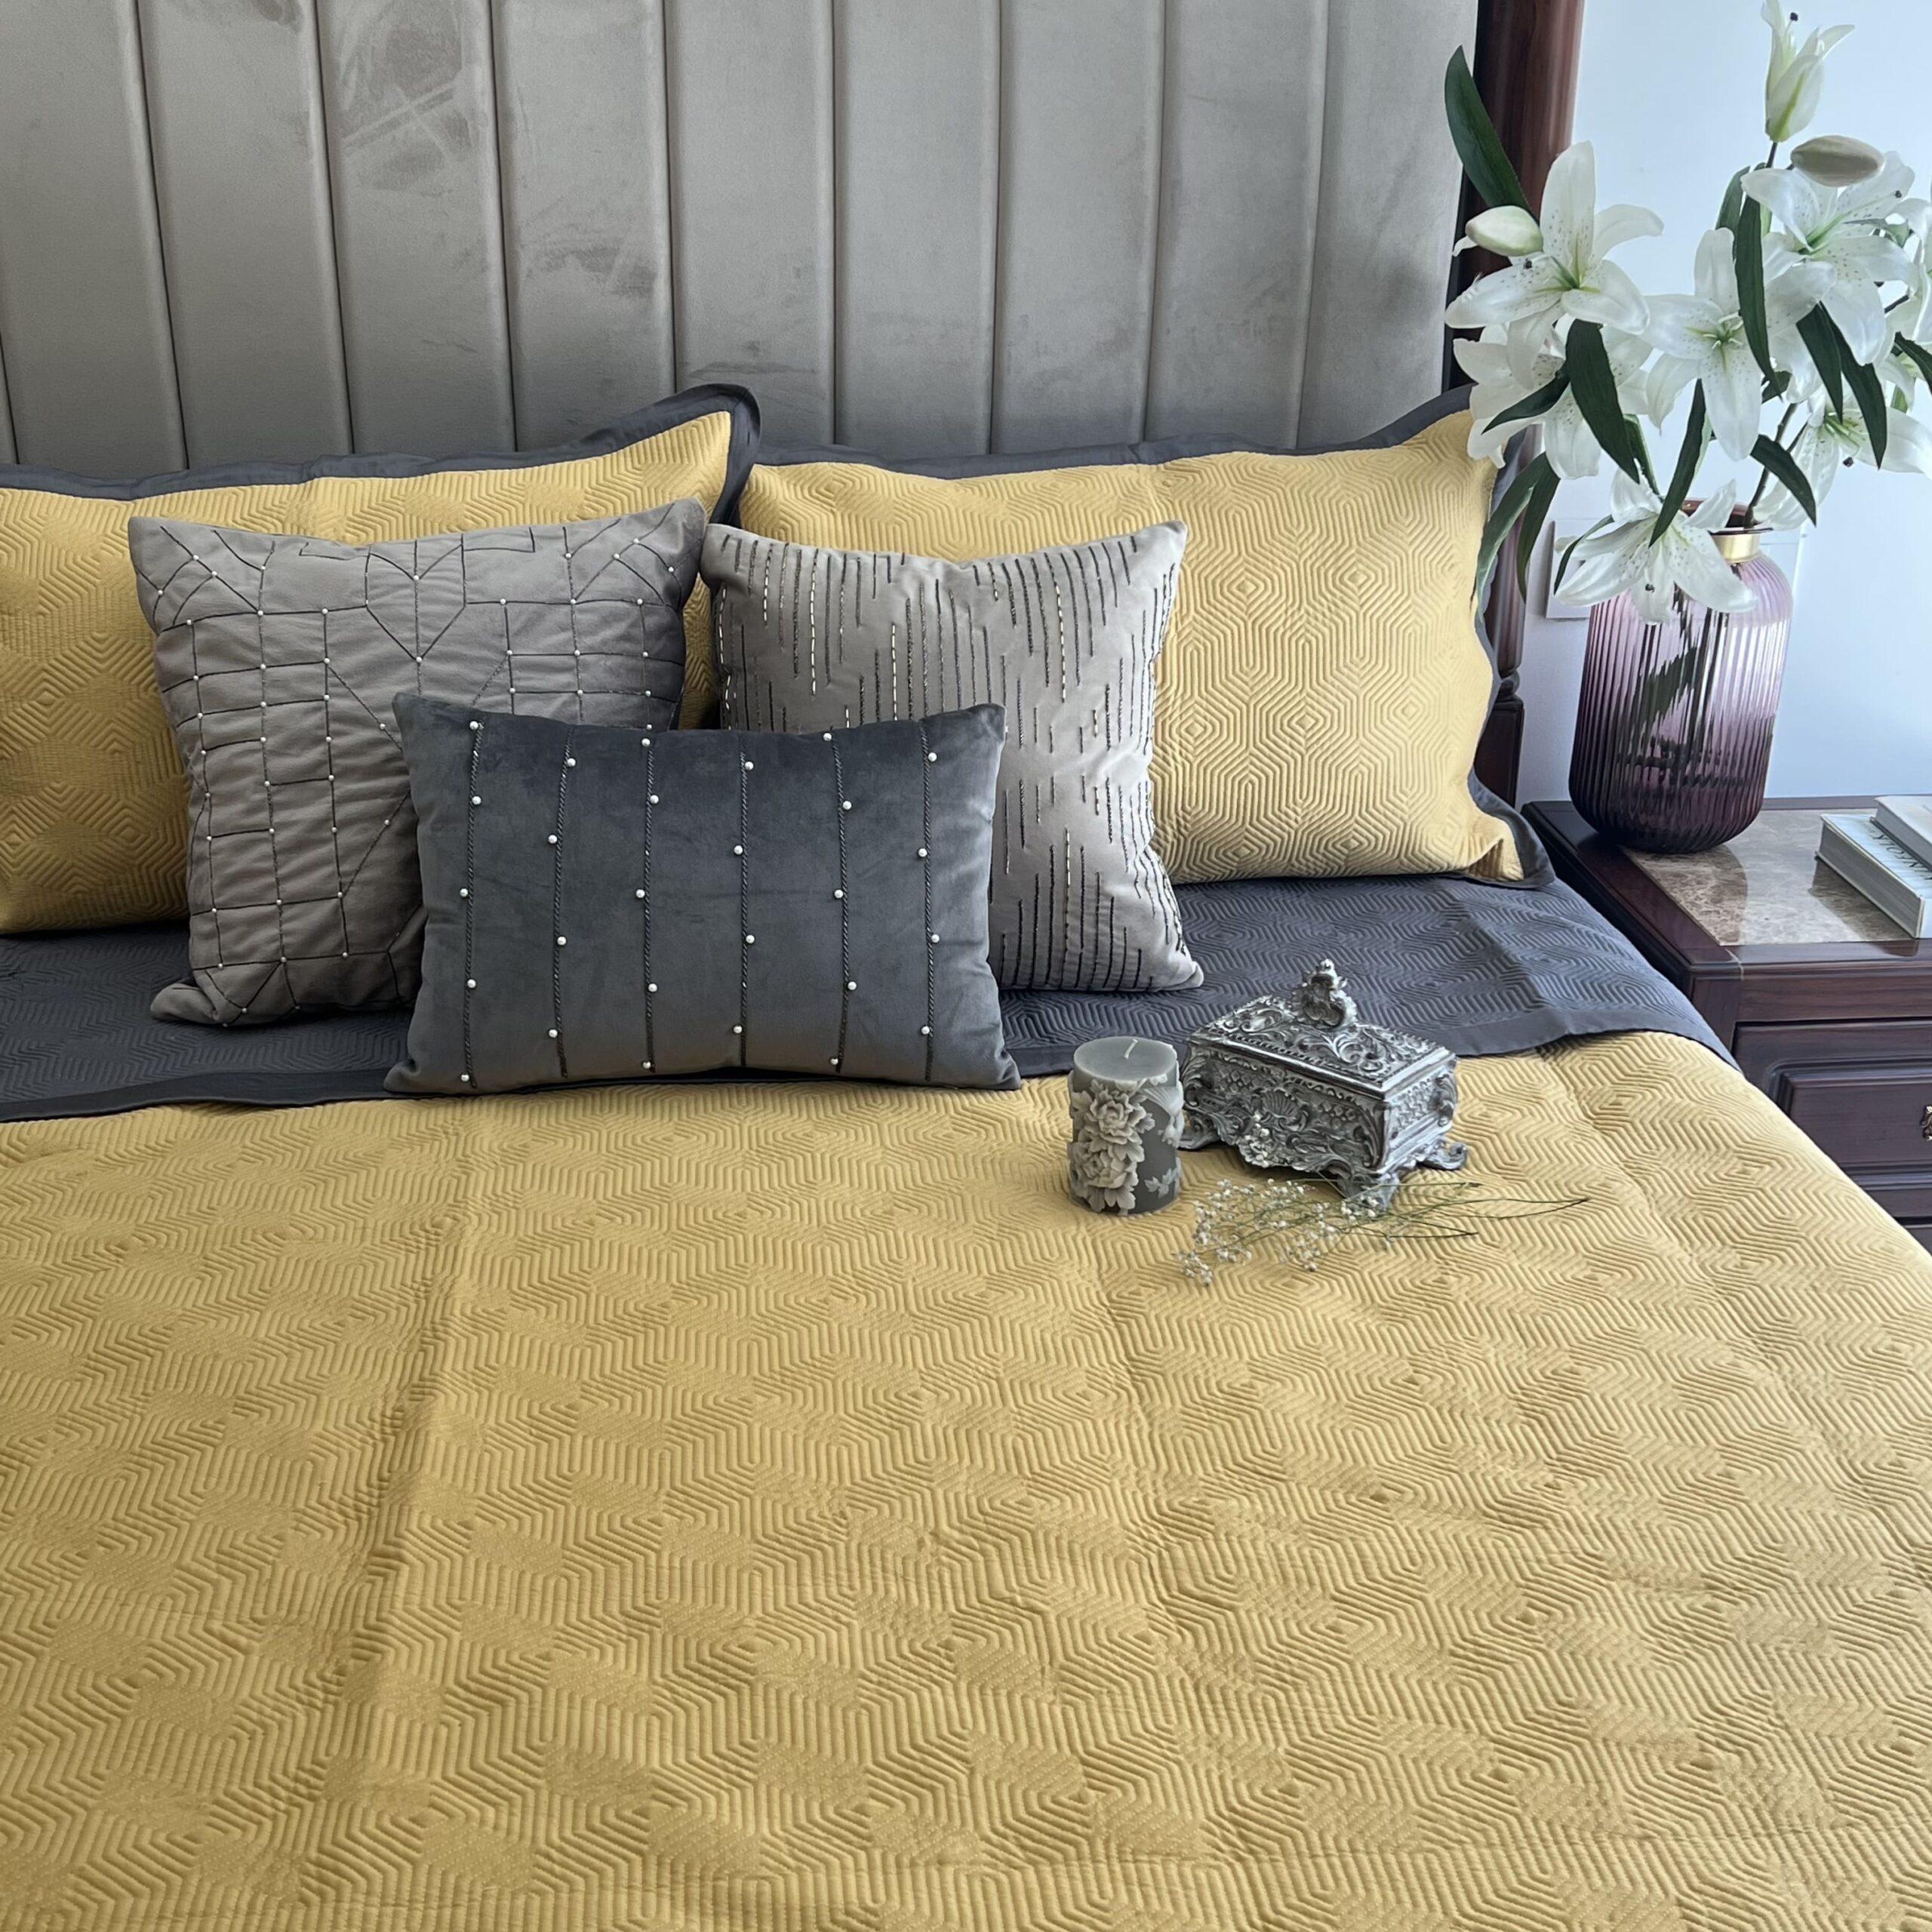 Buttercup Yellow and Dark Grey Diaco Cotton Reversible Bedspread